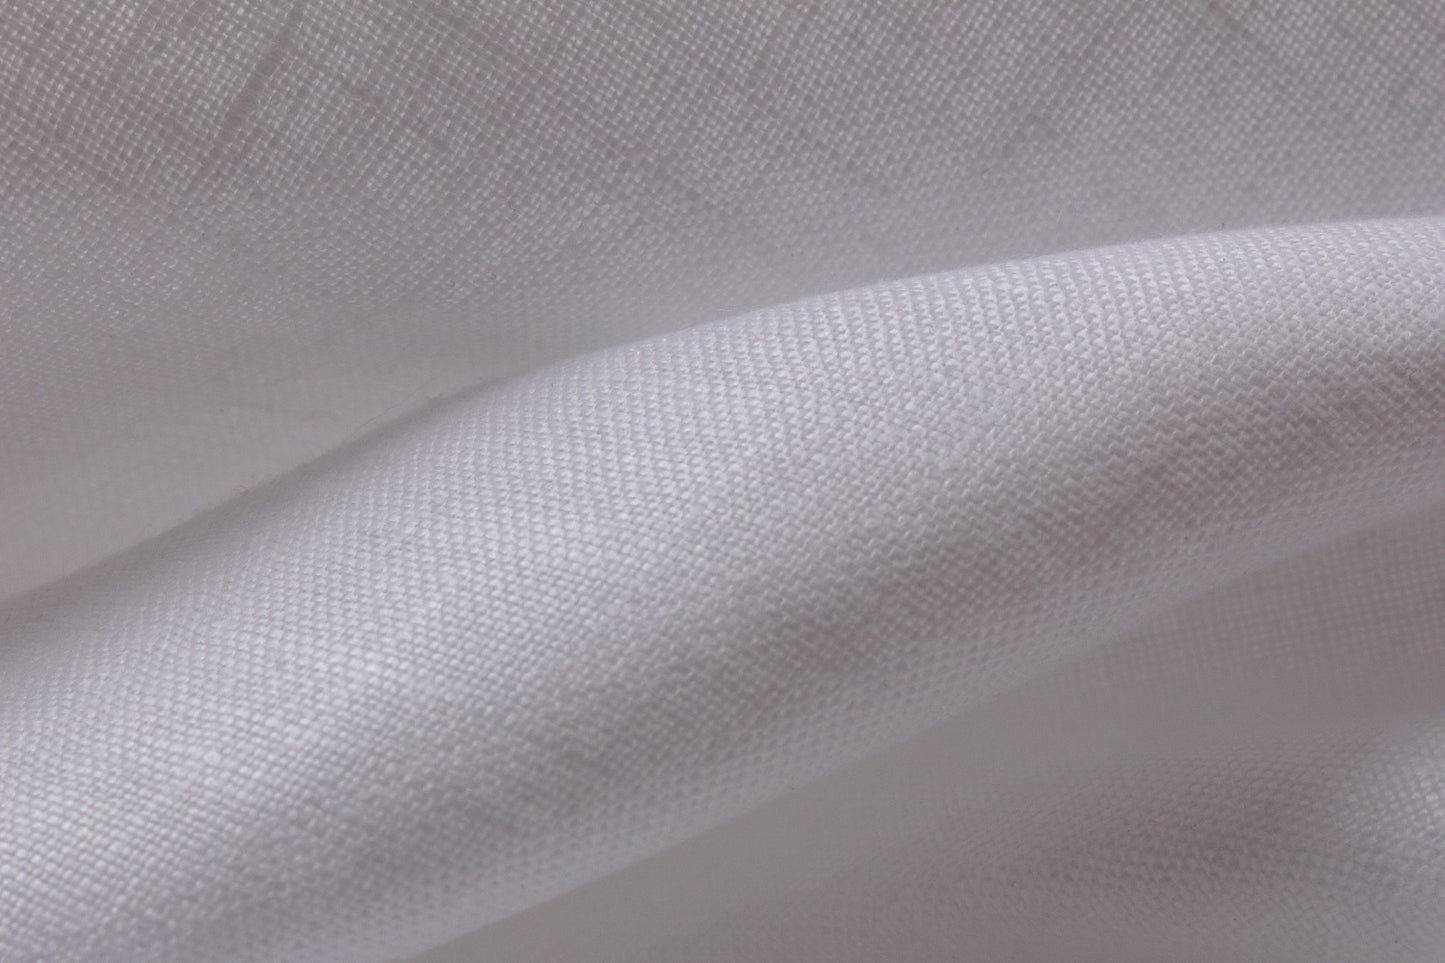 Hemp Fabric | Natural Hemp For Clothing | Buy Online hemp Fabric ...